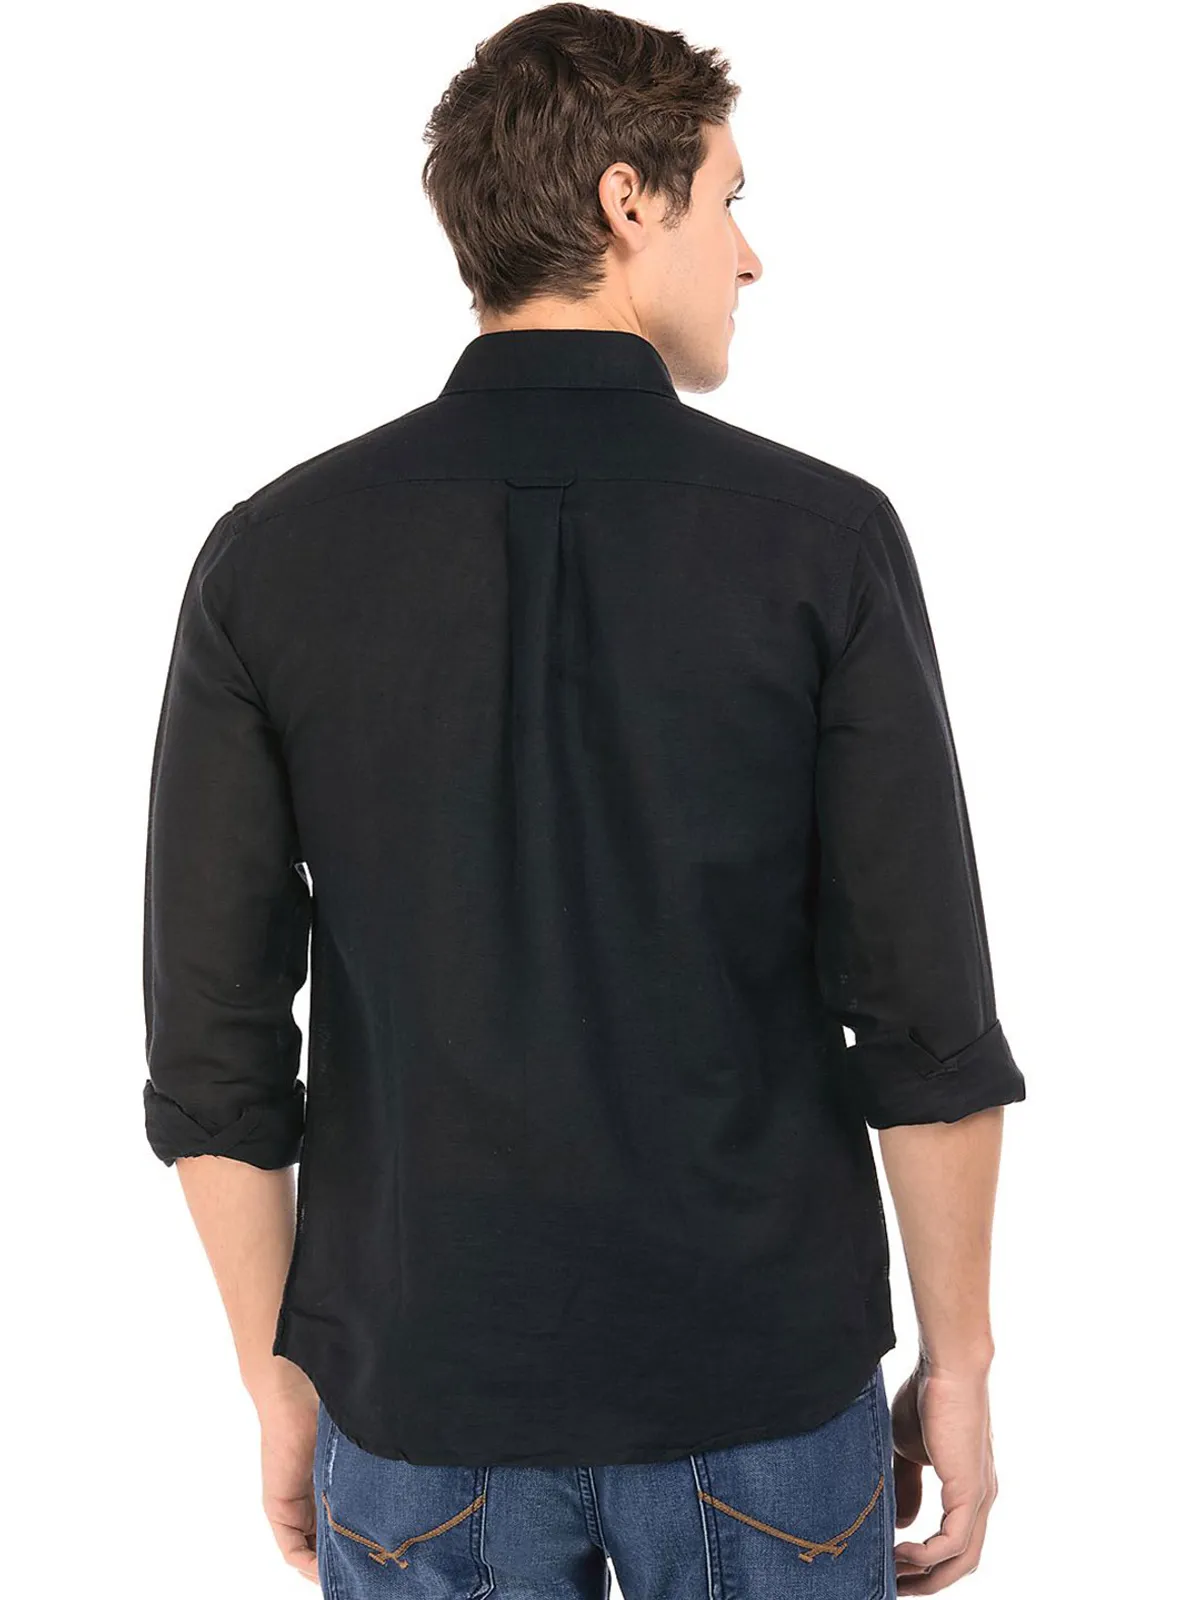 U S Polo Assn black cotton shirt